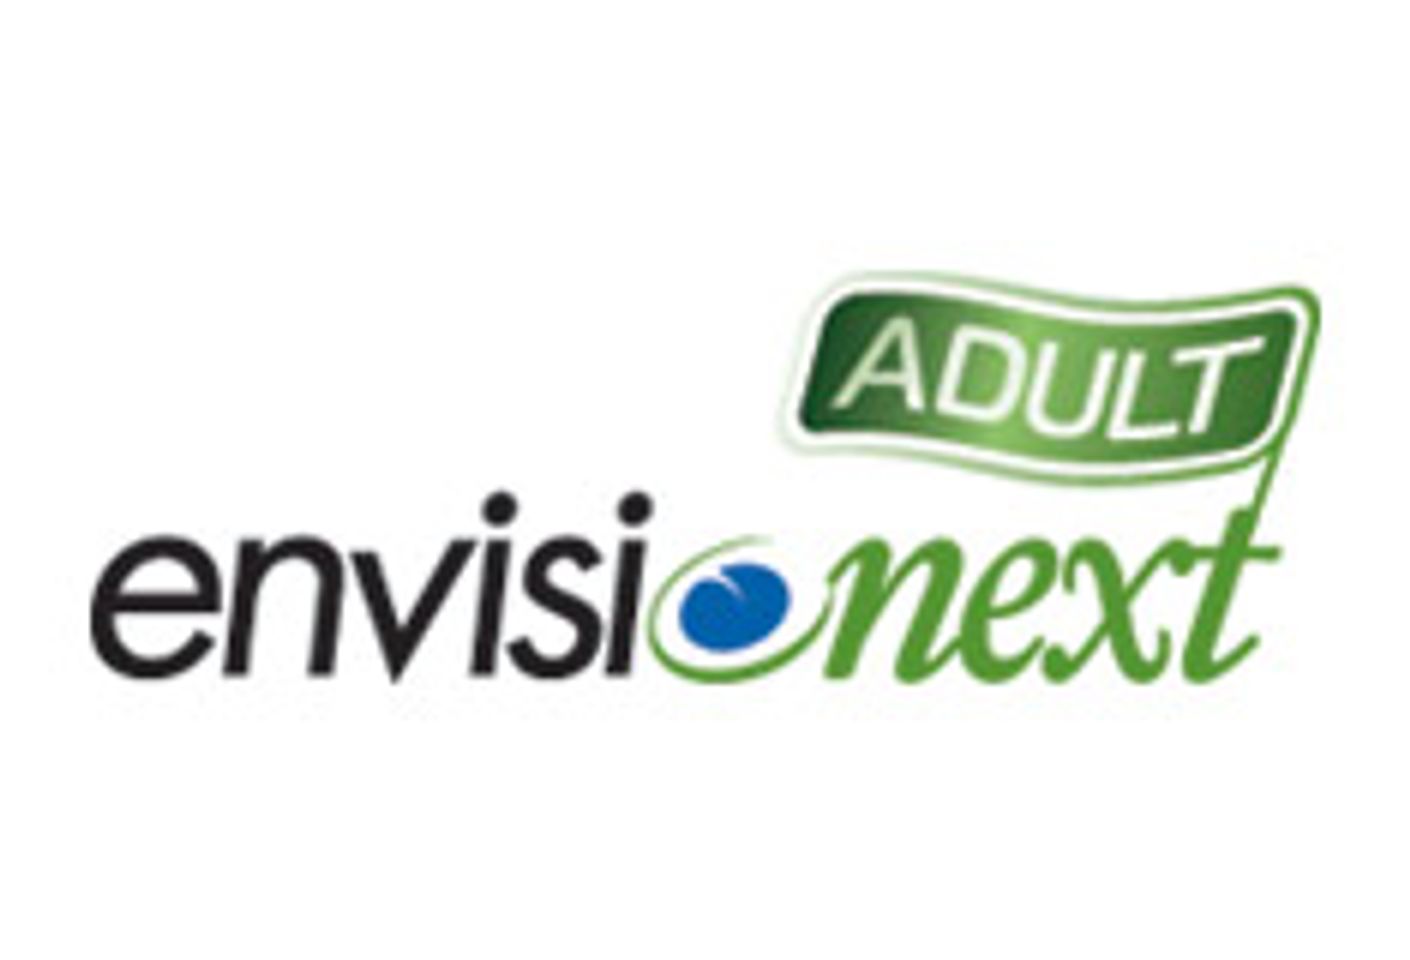 EnvisionextAdult.com Announces Release of AdultDesignContest.com